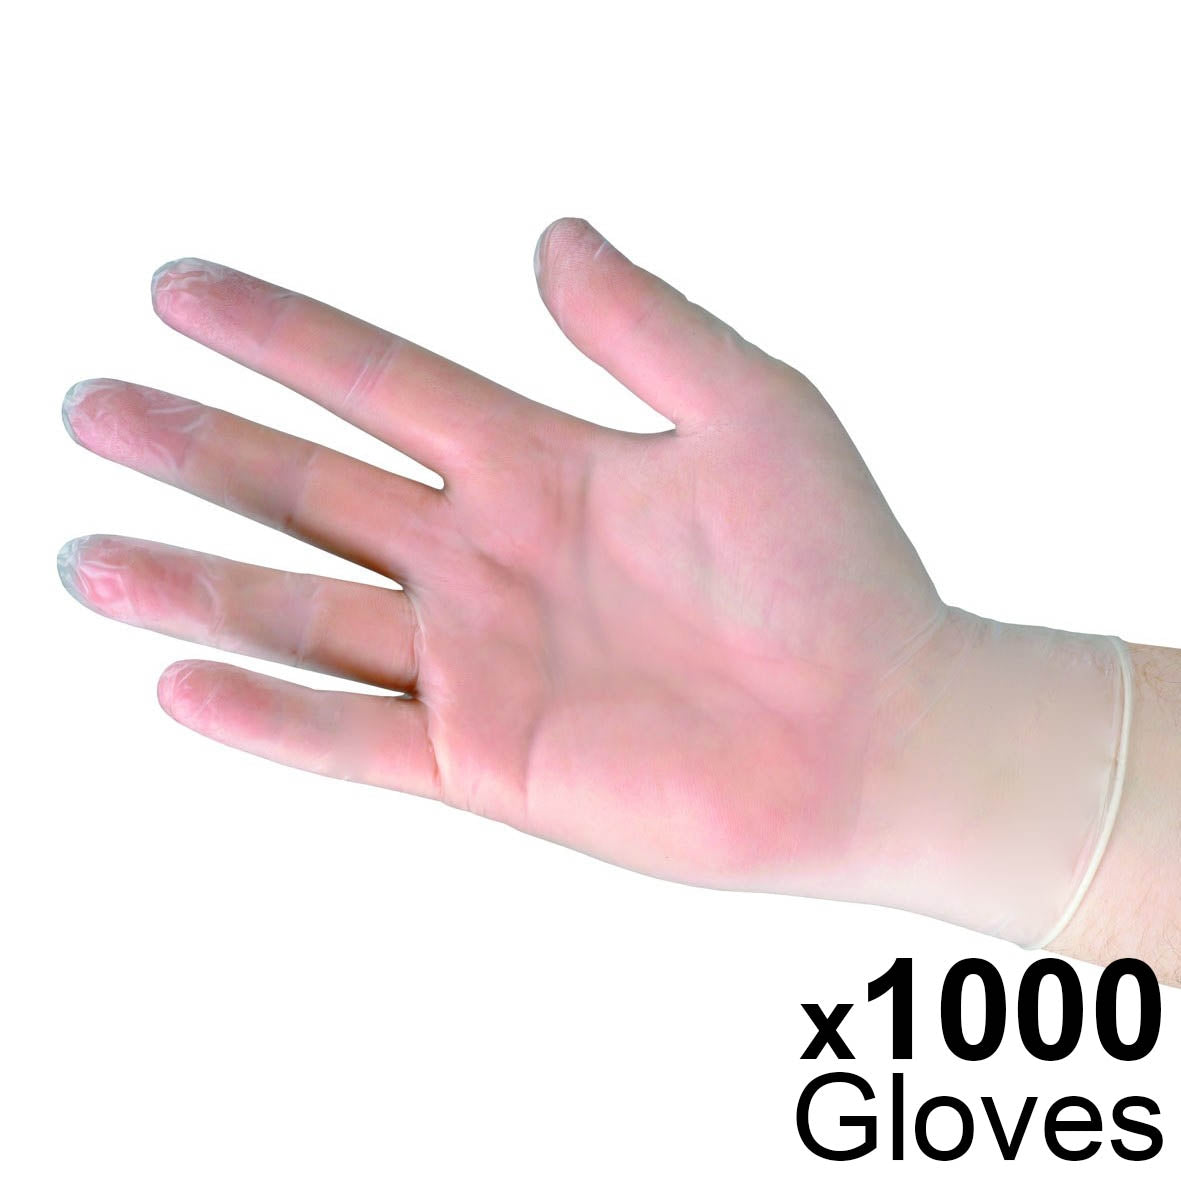 Bodyguards Powder Free Vinyl Gloves Medium per Case of 1000